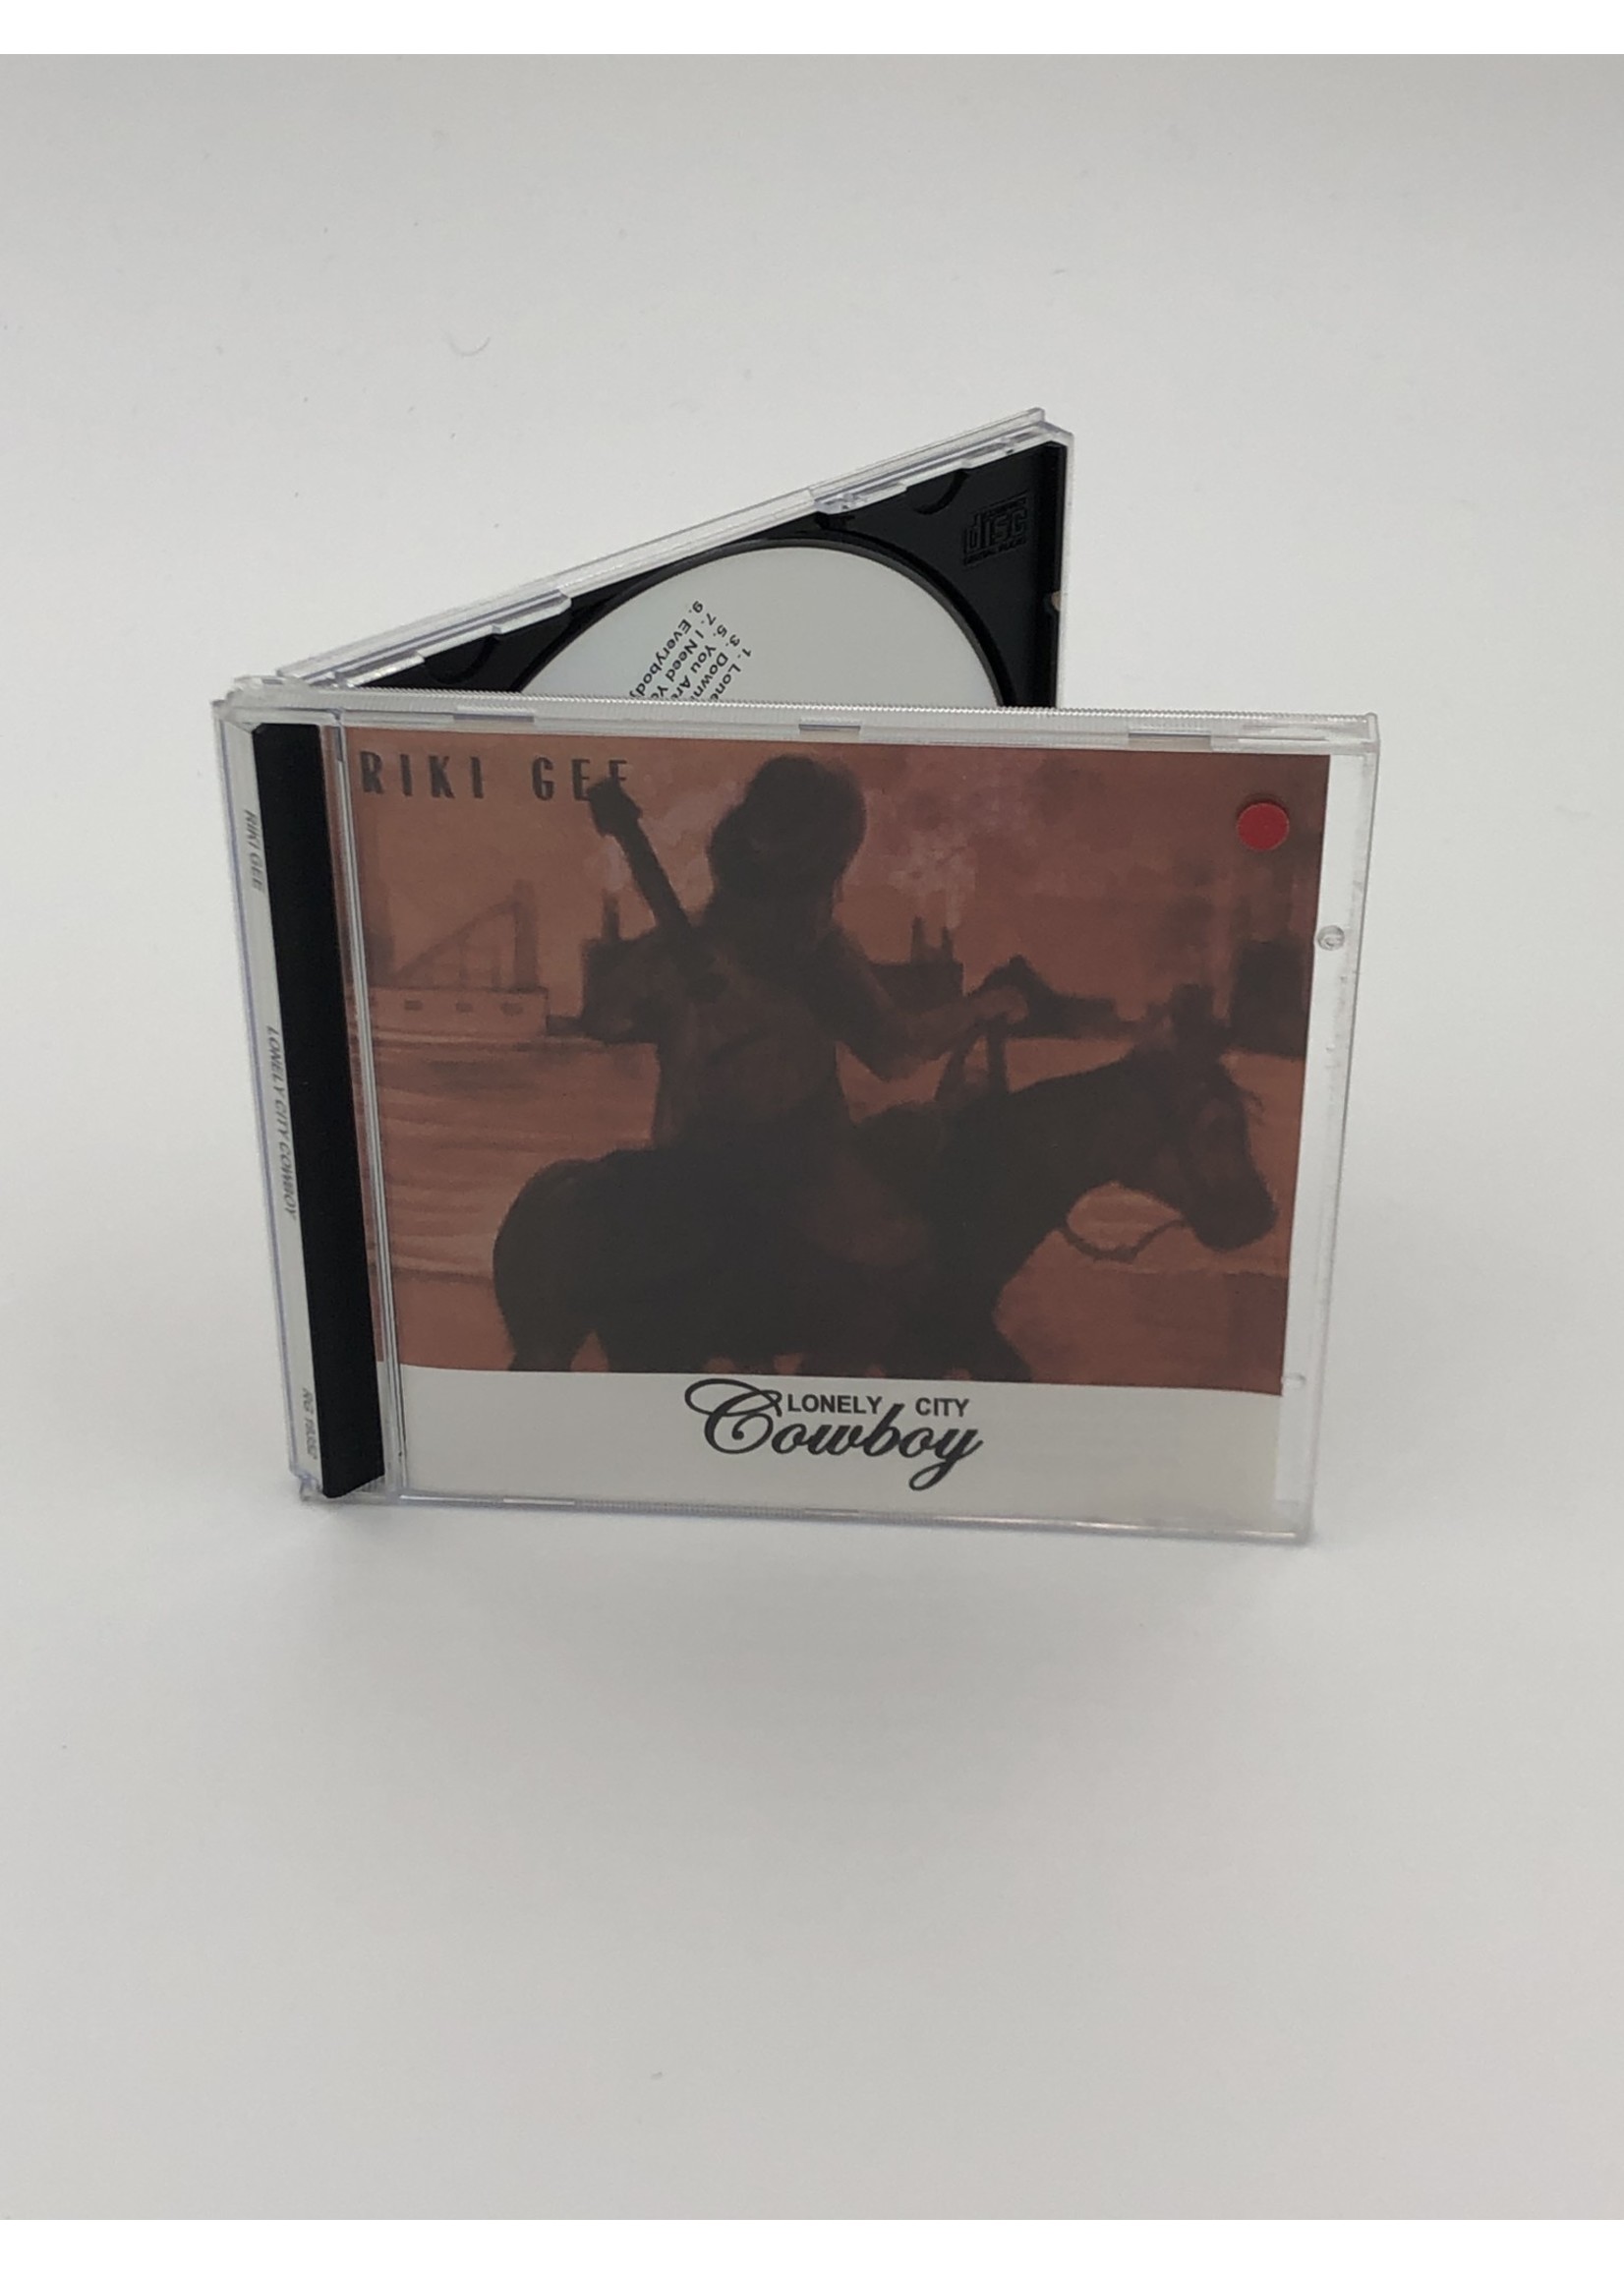 CD Riki Gee: Lonely City Cowboy CD